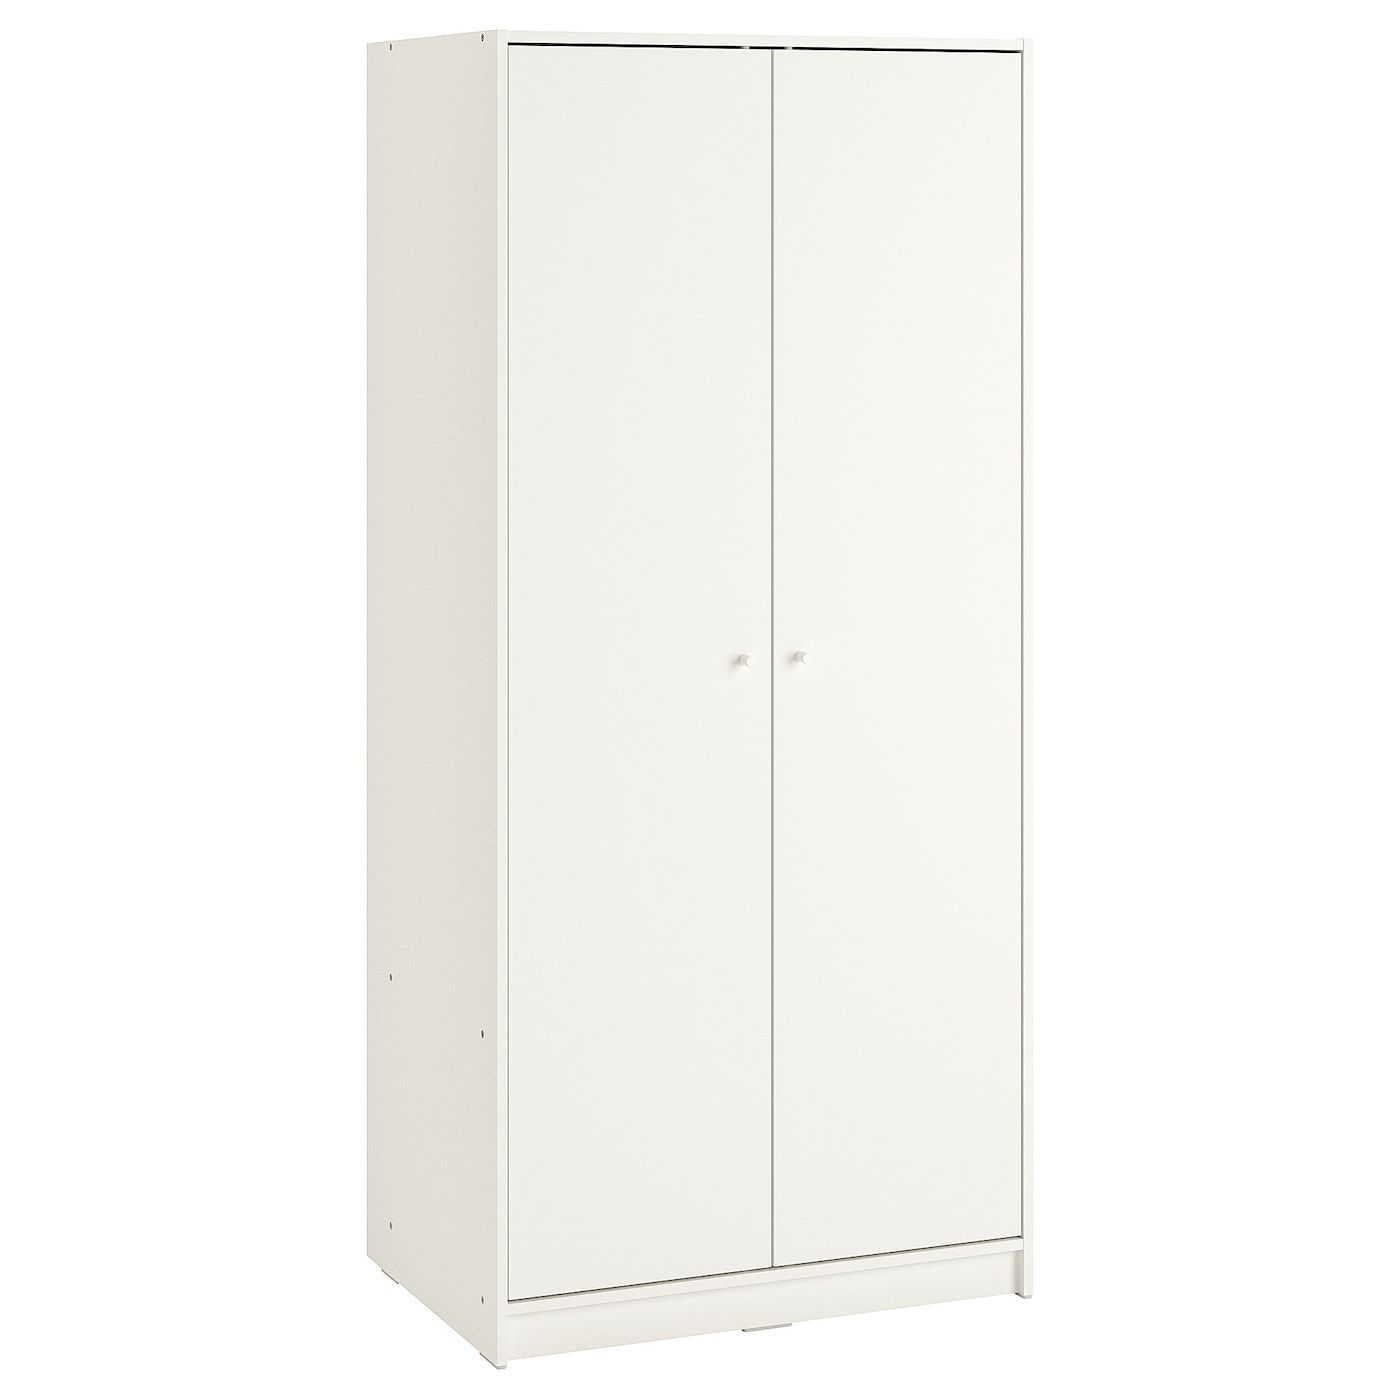 Kleppstad Wardrobe With 2 Doors, White, 311/4x691/4" – Ikea Throughout Cheap 2 Door Wardrobes (Gallery 6 of 20)